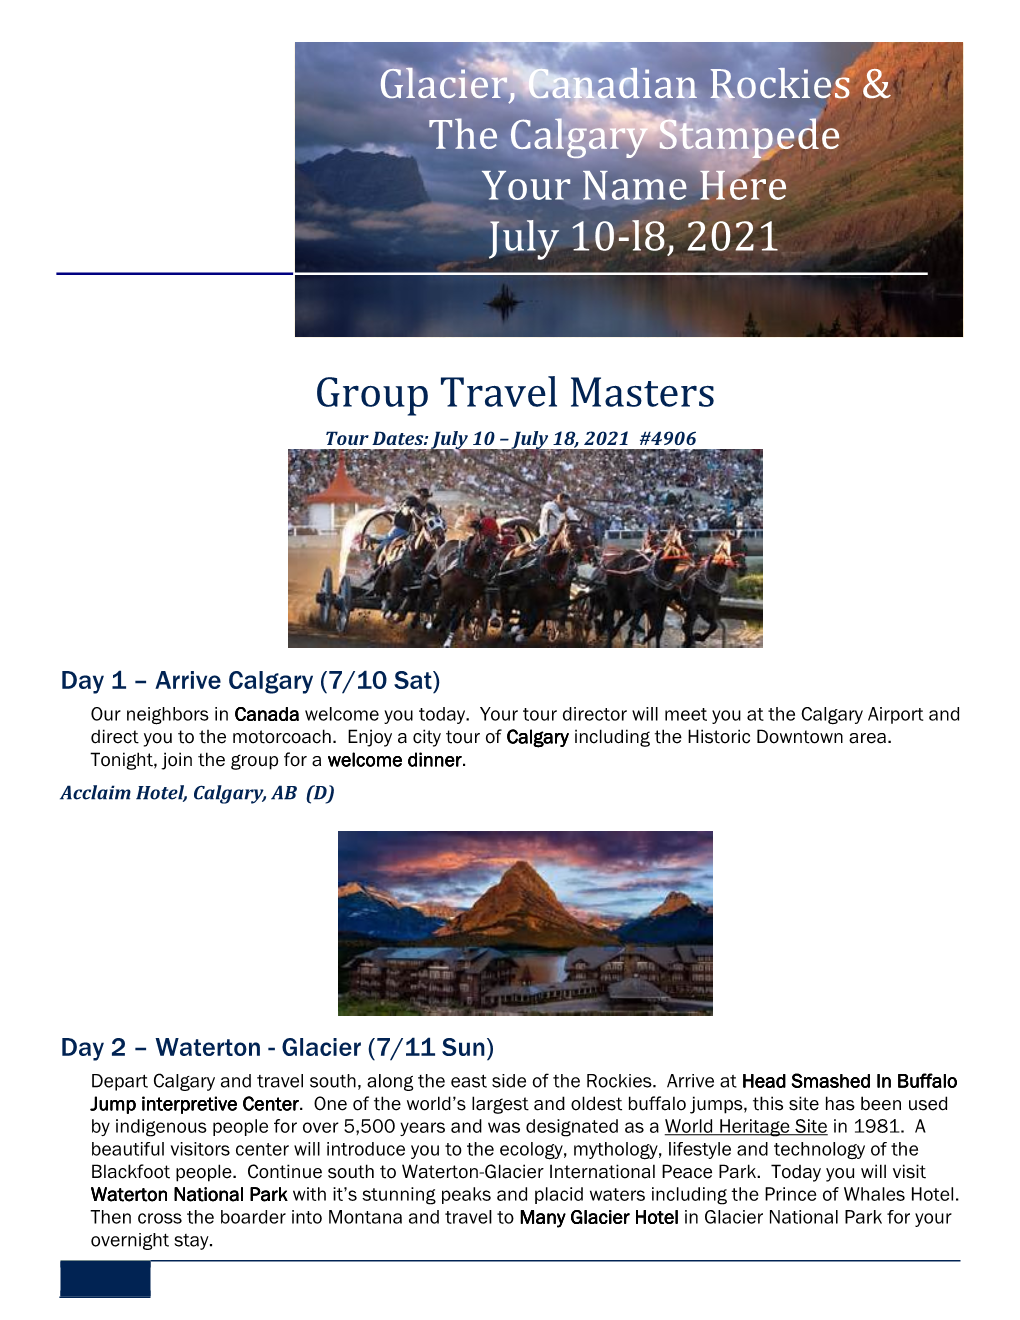 Group Travel Masters Glacier, Canadian Rockies & the Calgary